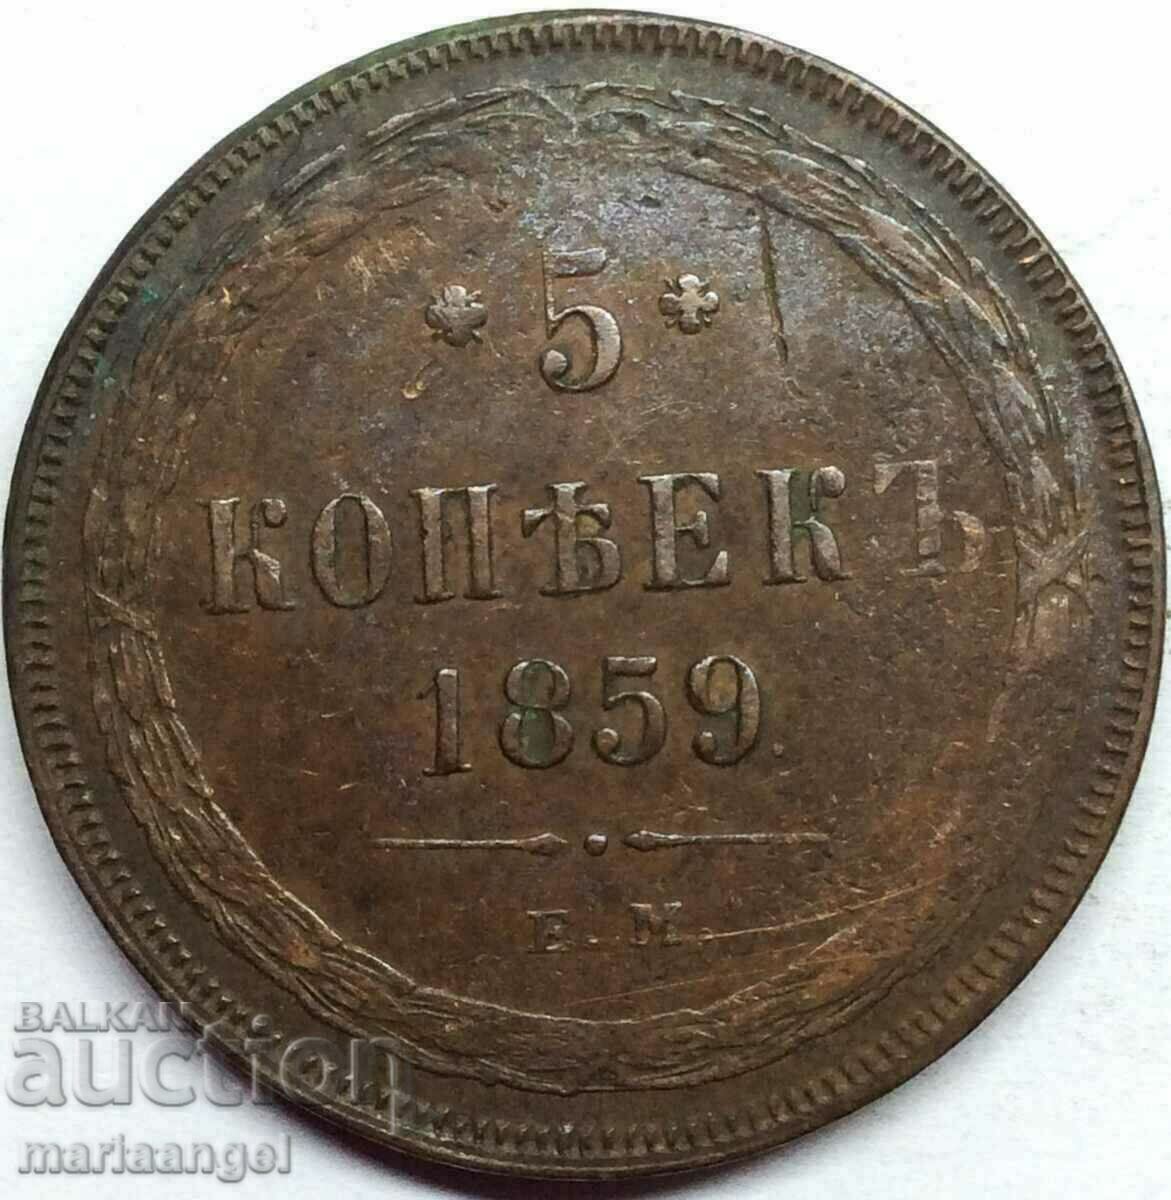 5 kopecks 1859 Russia 24.78g bronze